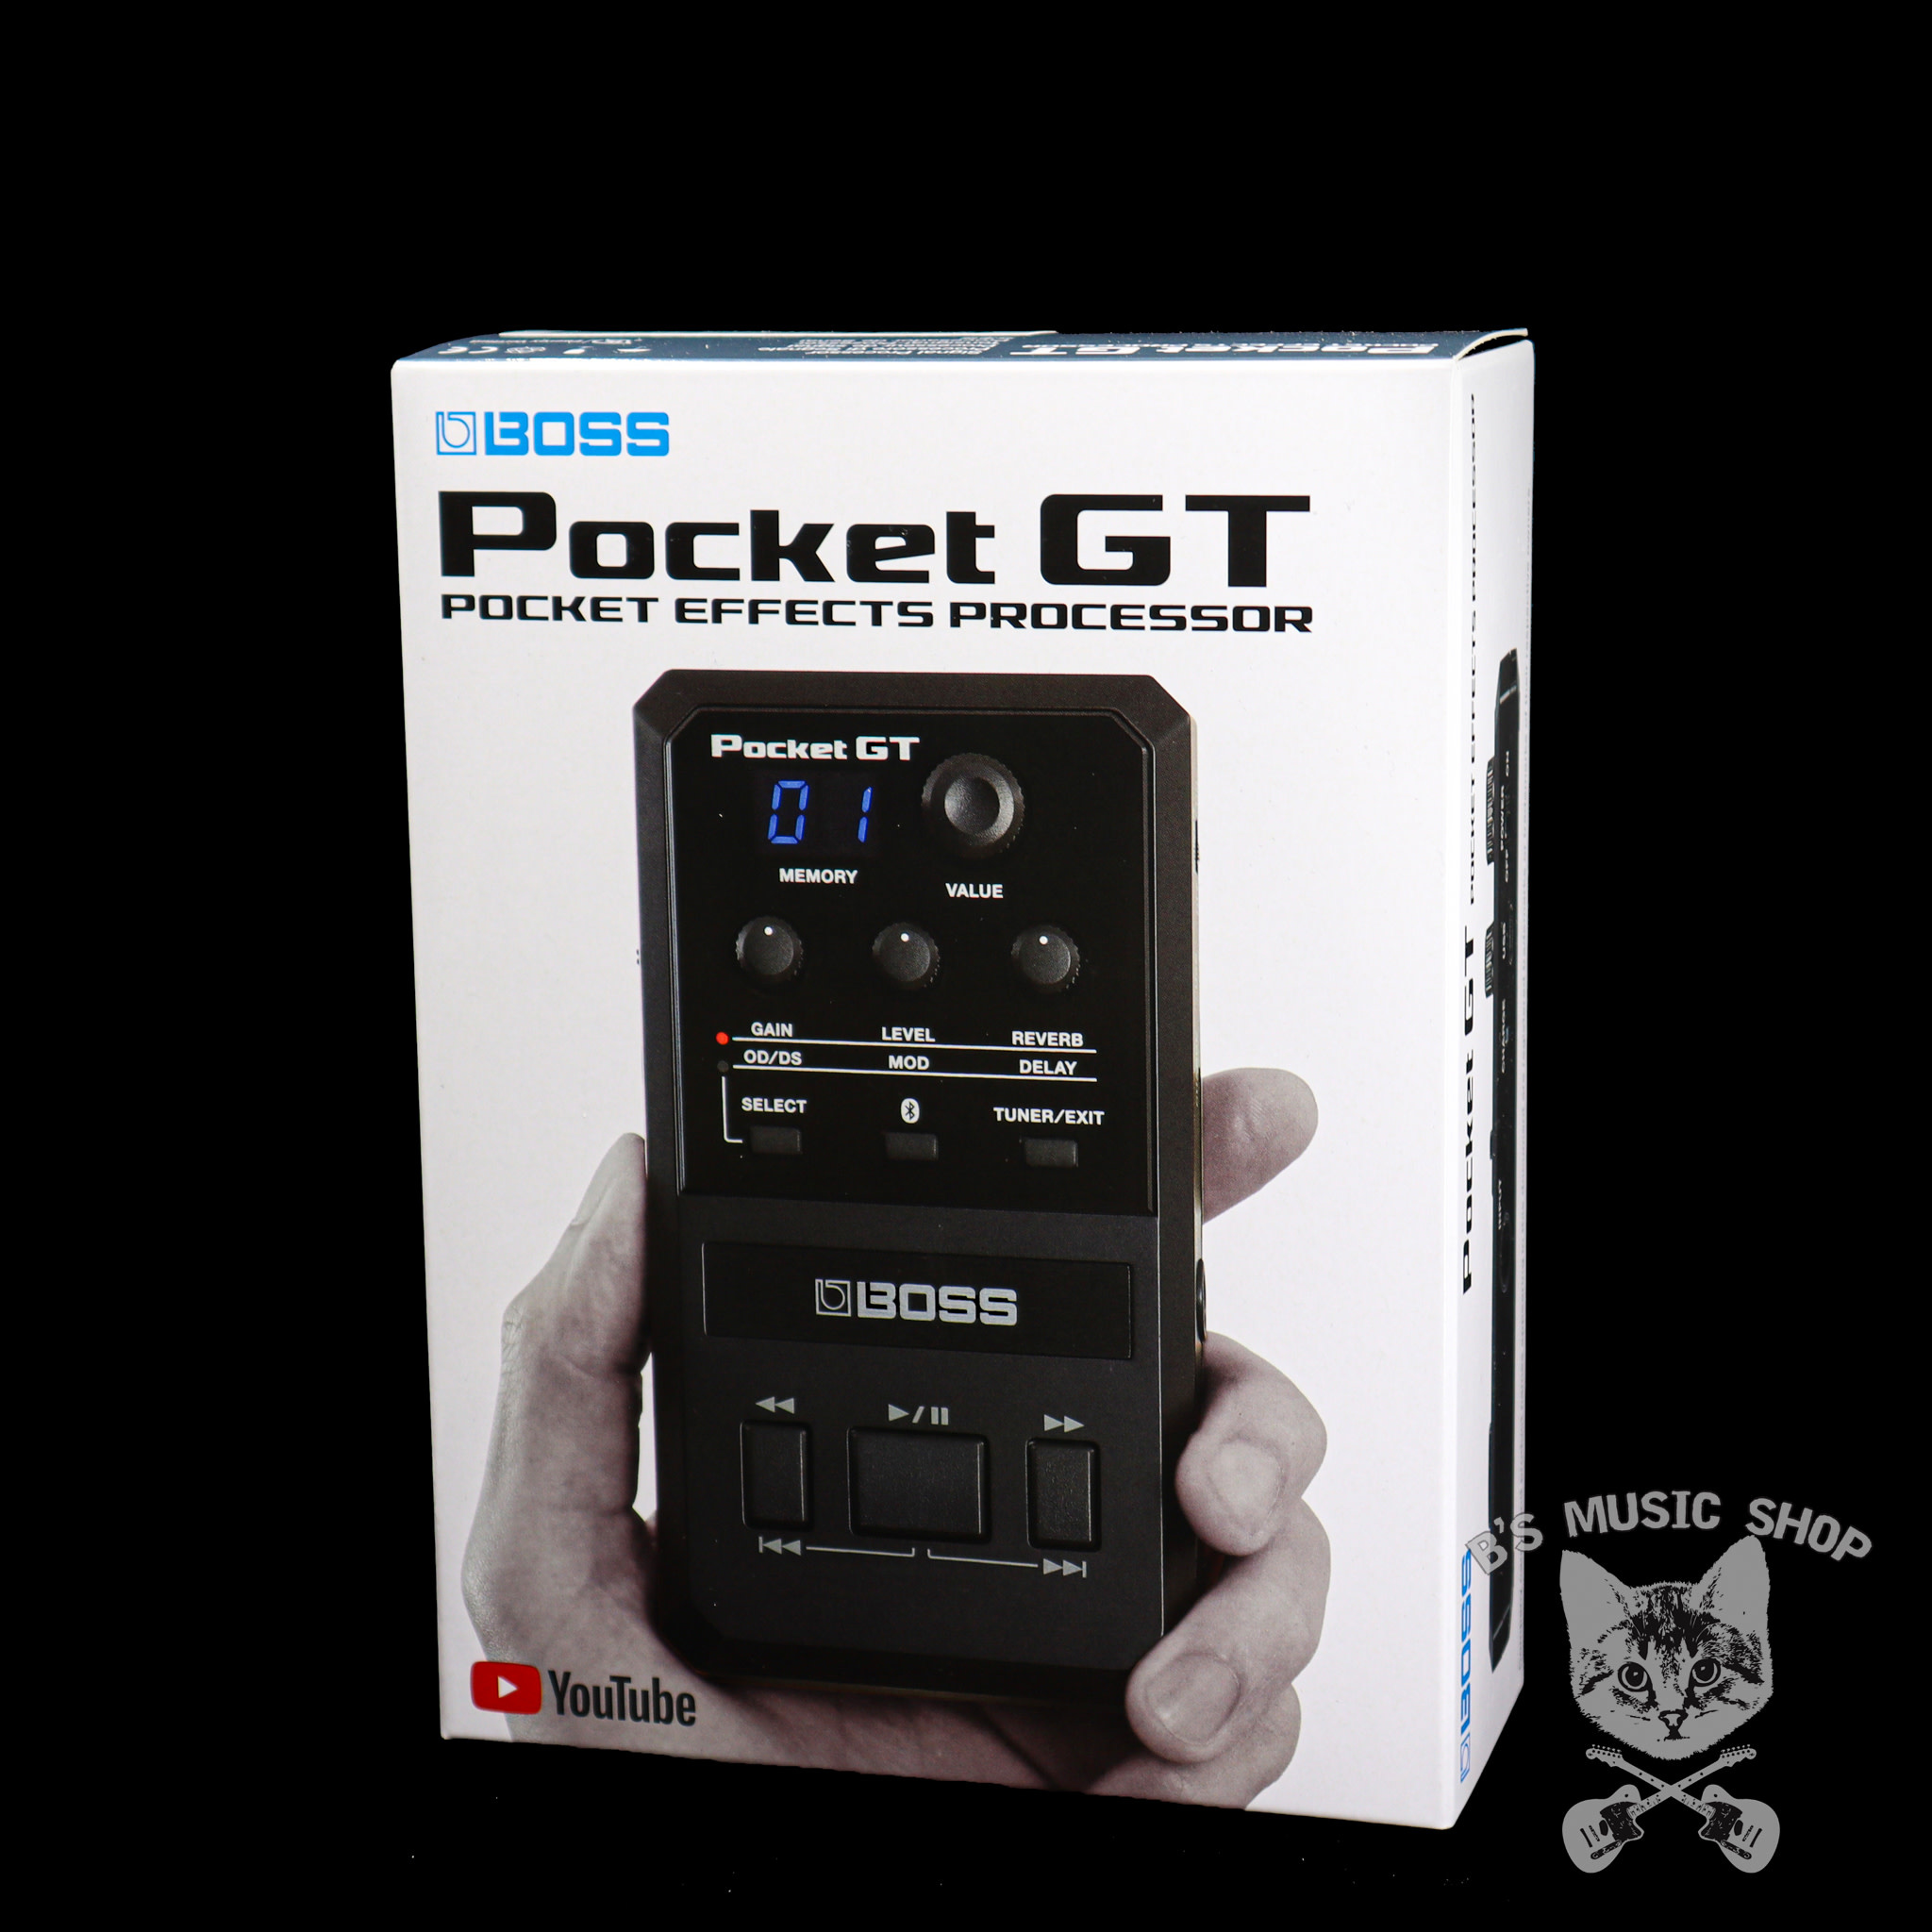 BOSS Pocket GT Pocket Effects Processor - B's Music Shop